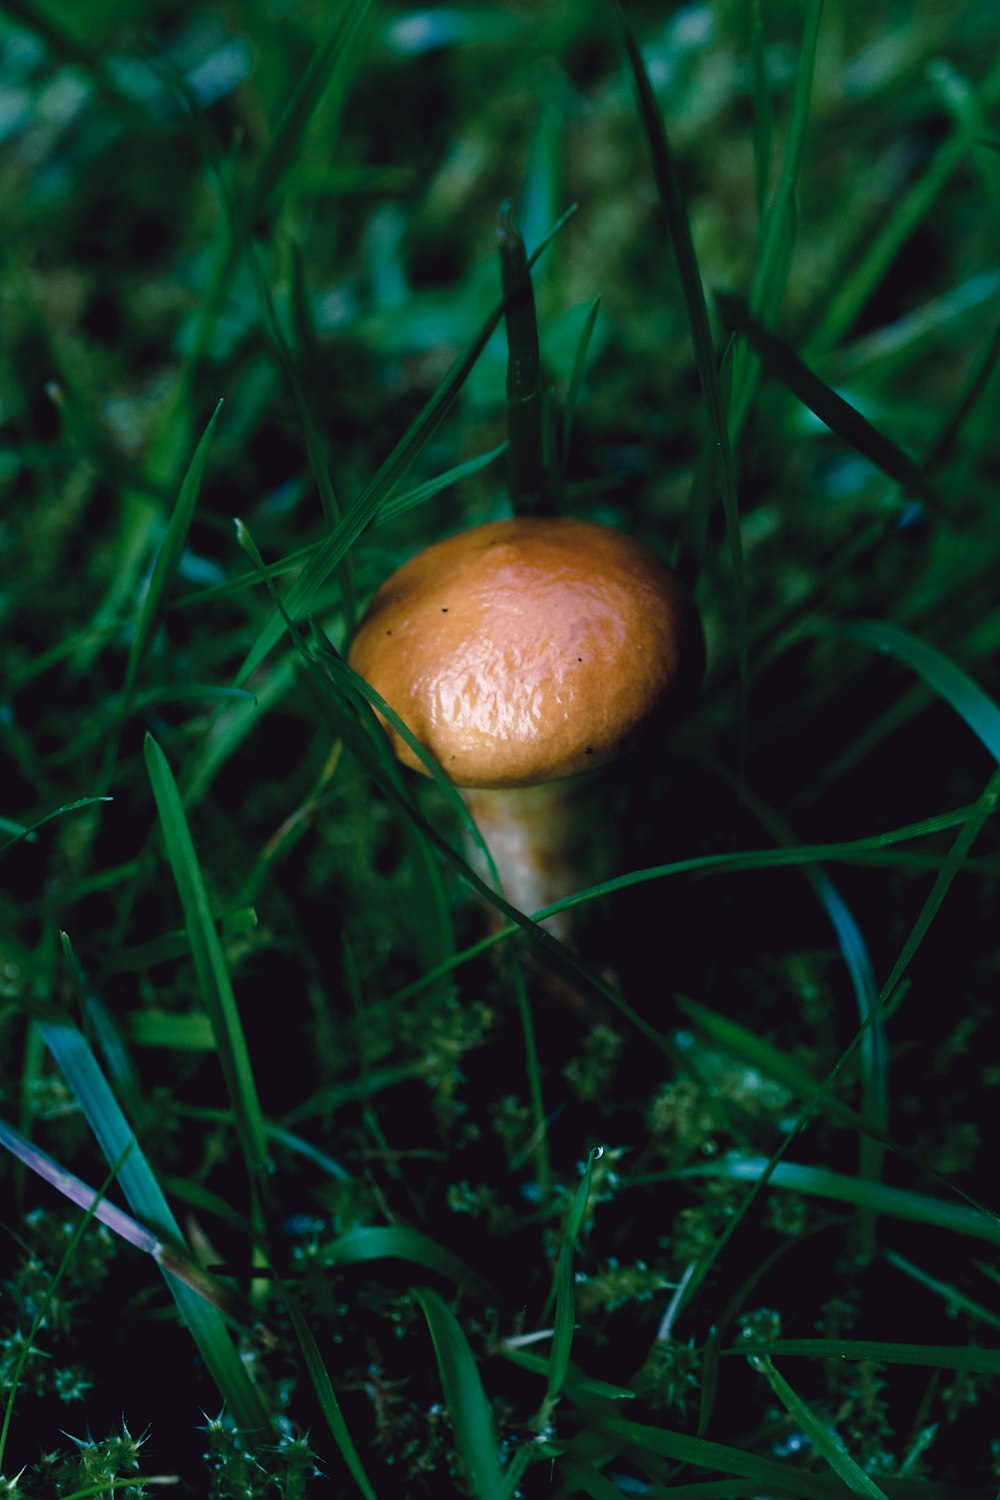 brown mushroom close-up photo